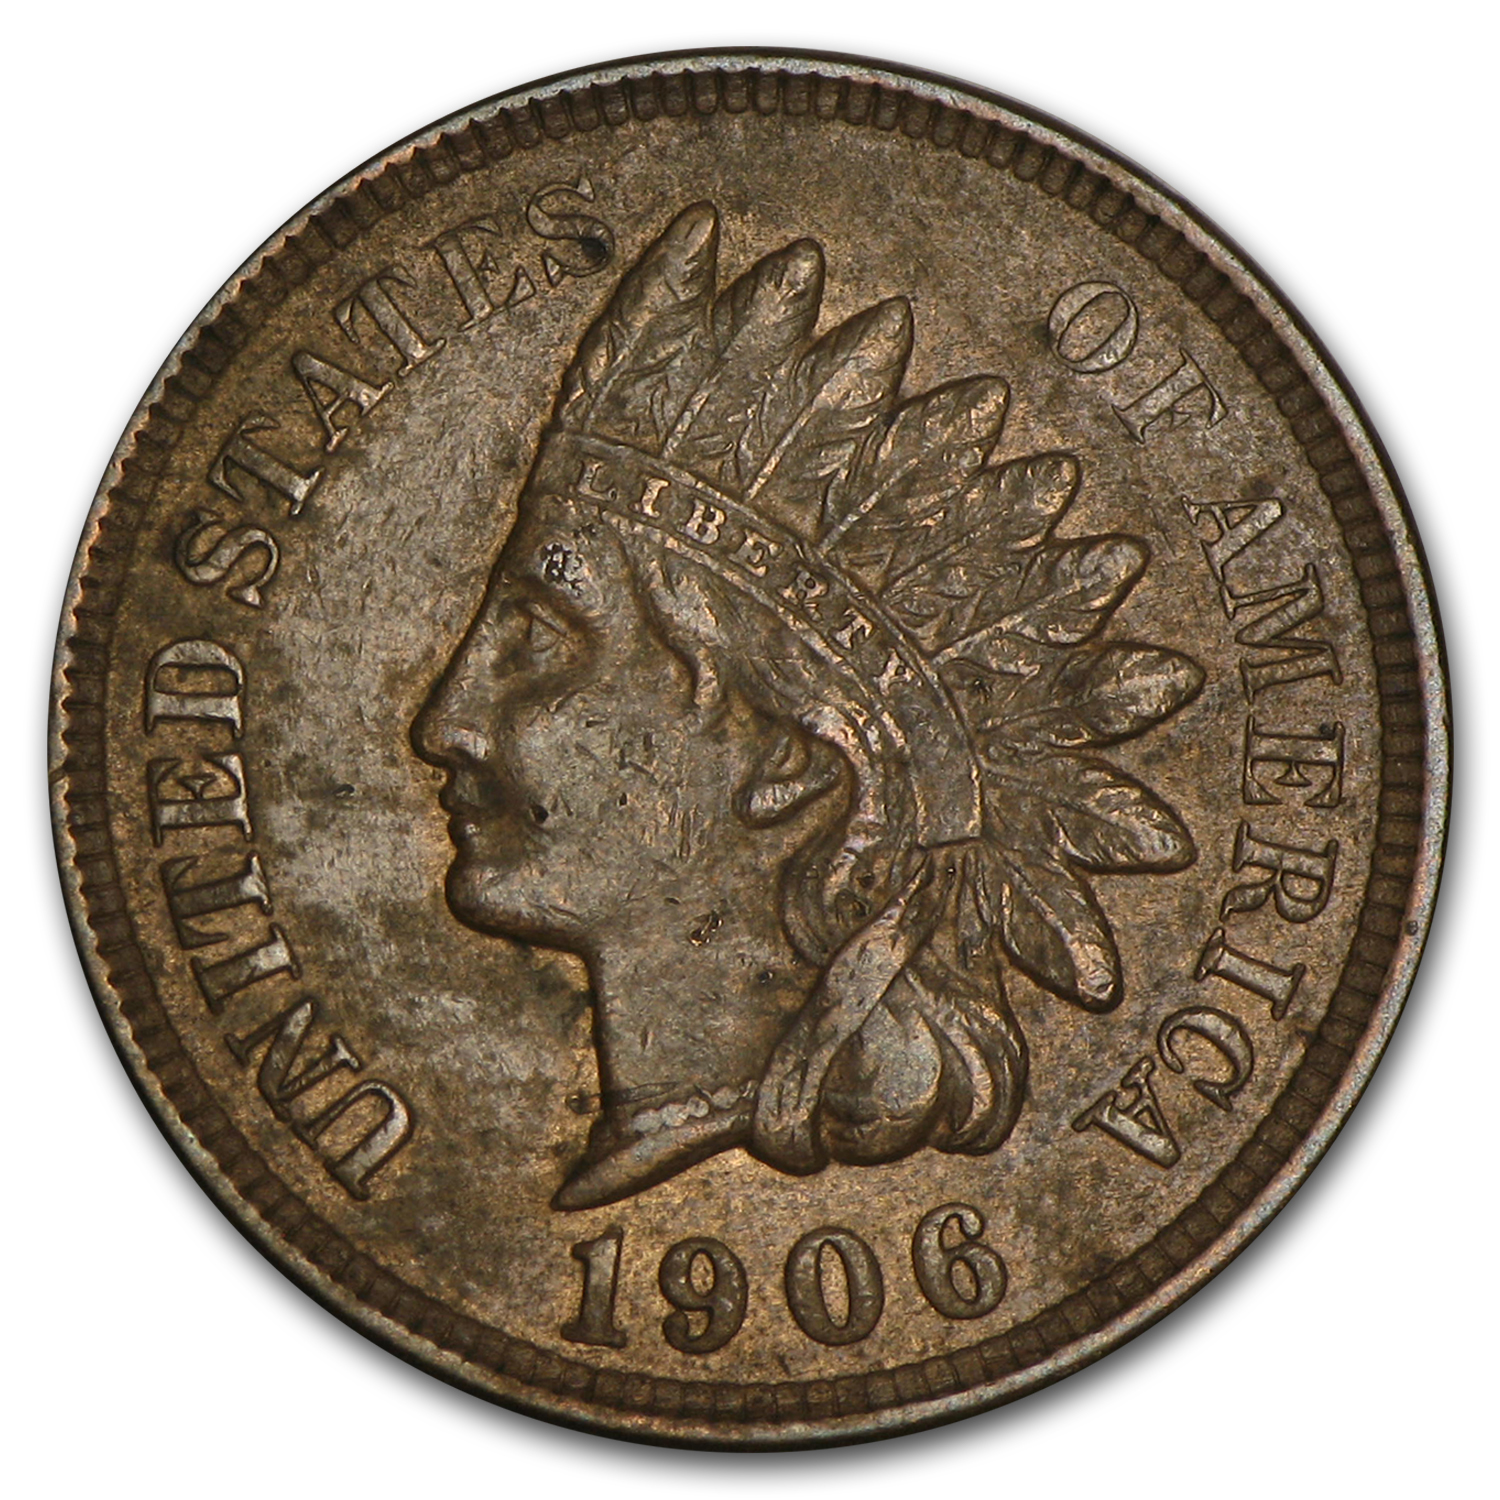 Buy 1906 Indian Head Cent AU